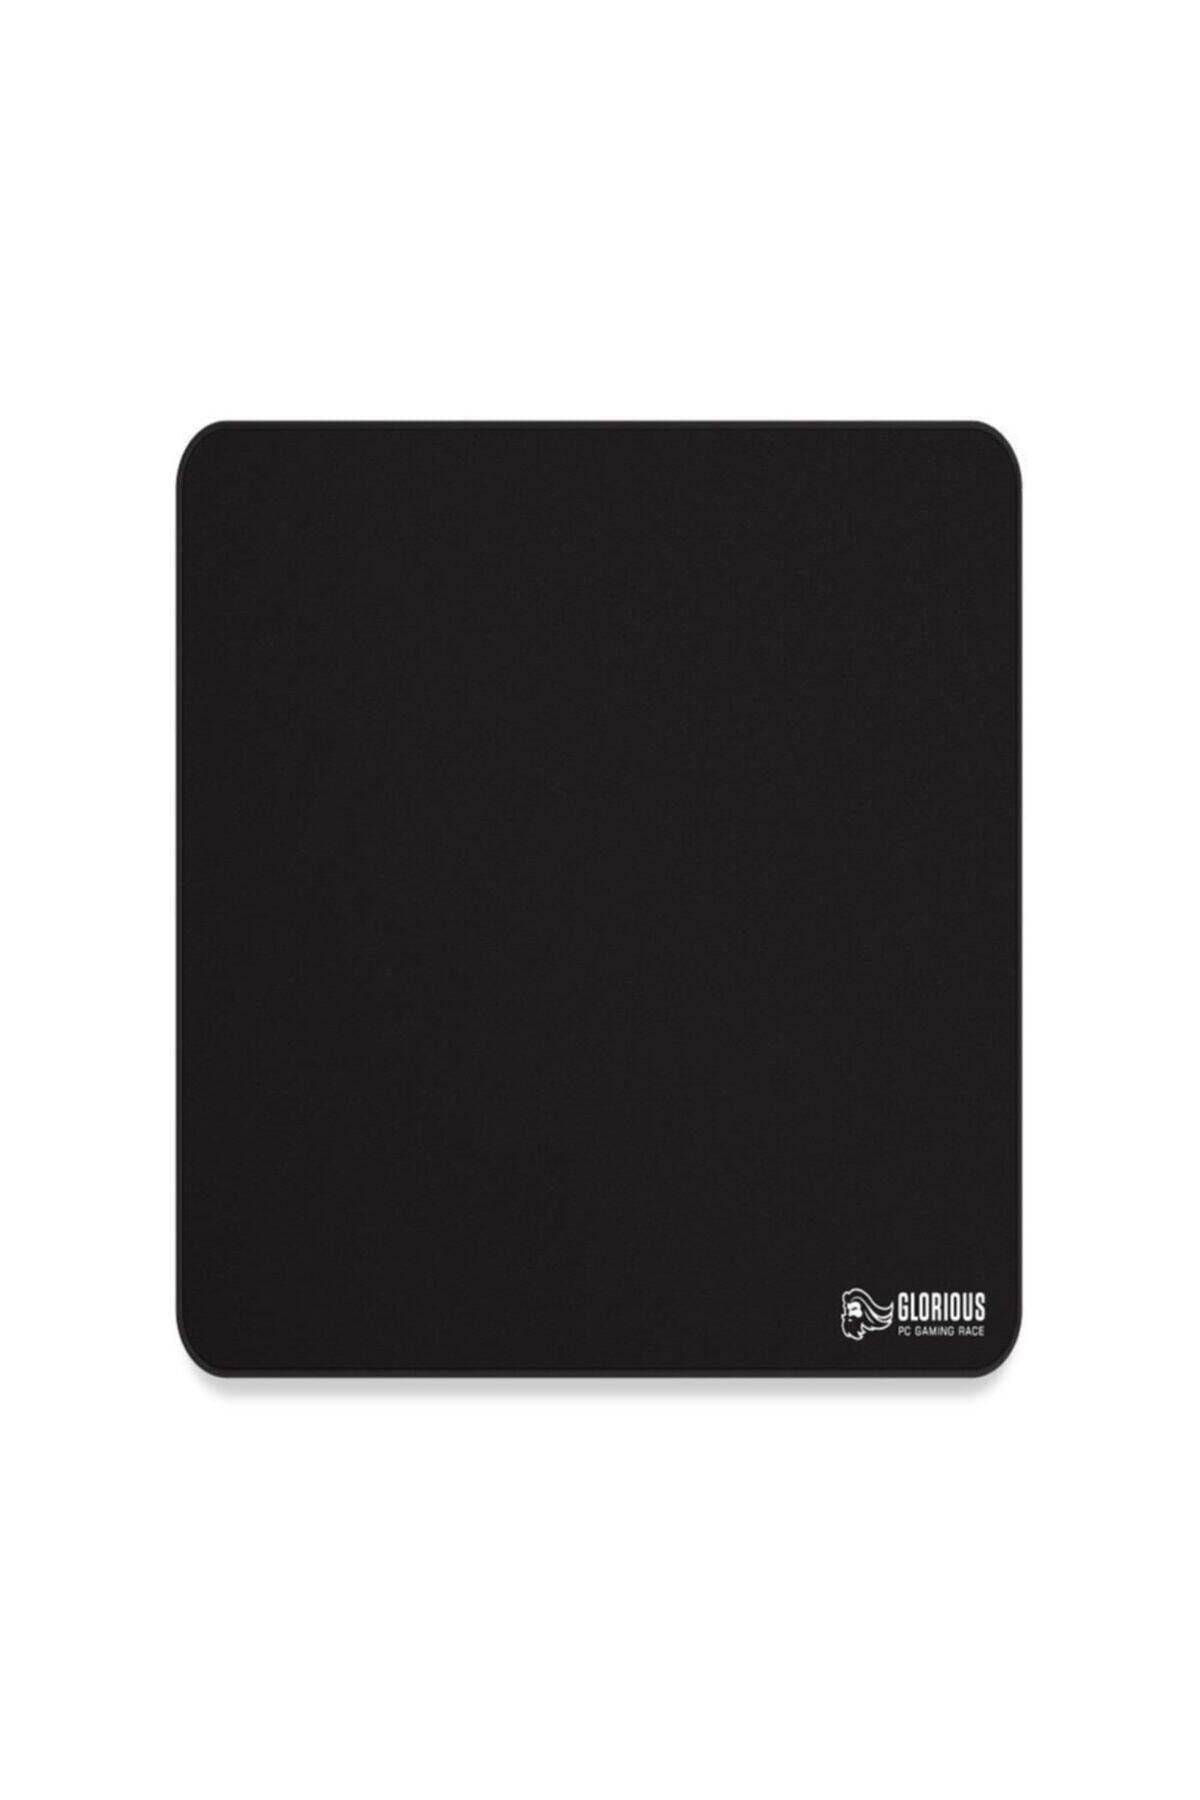 Glorious Large Mousepad 11"x13" (28x33cm)